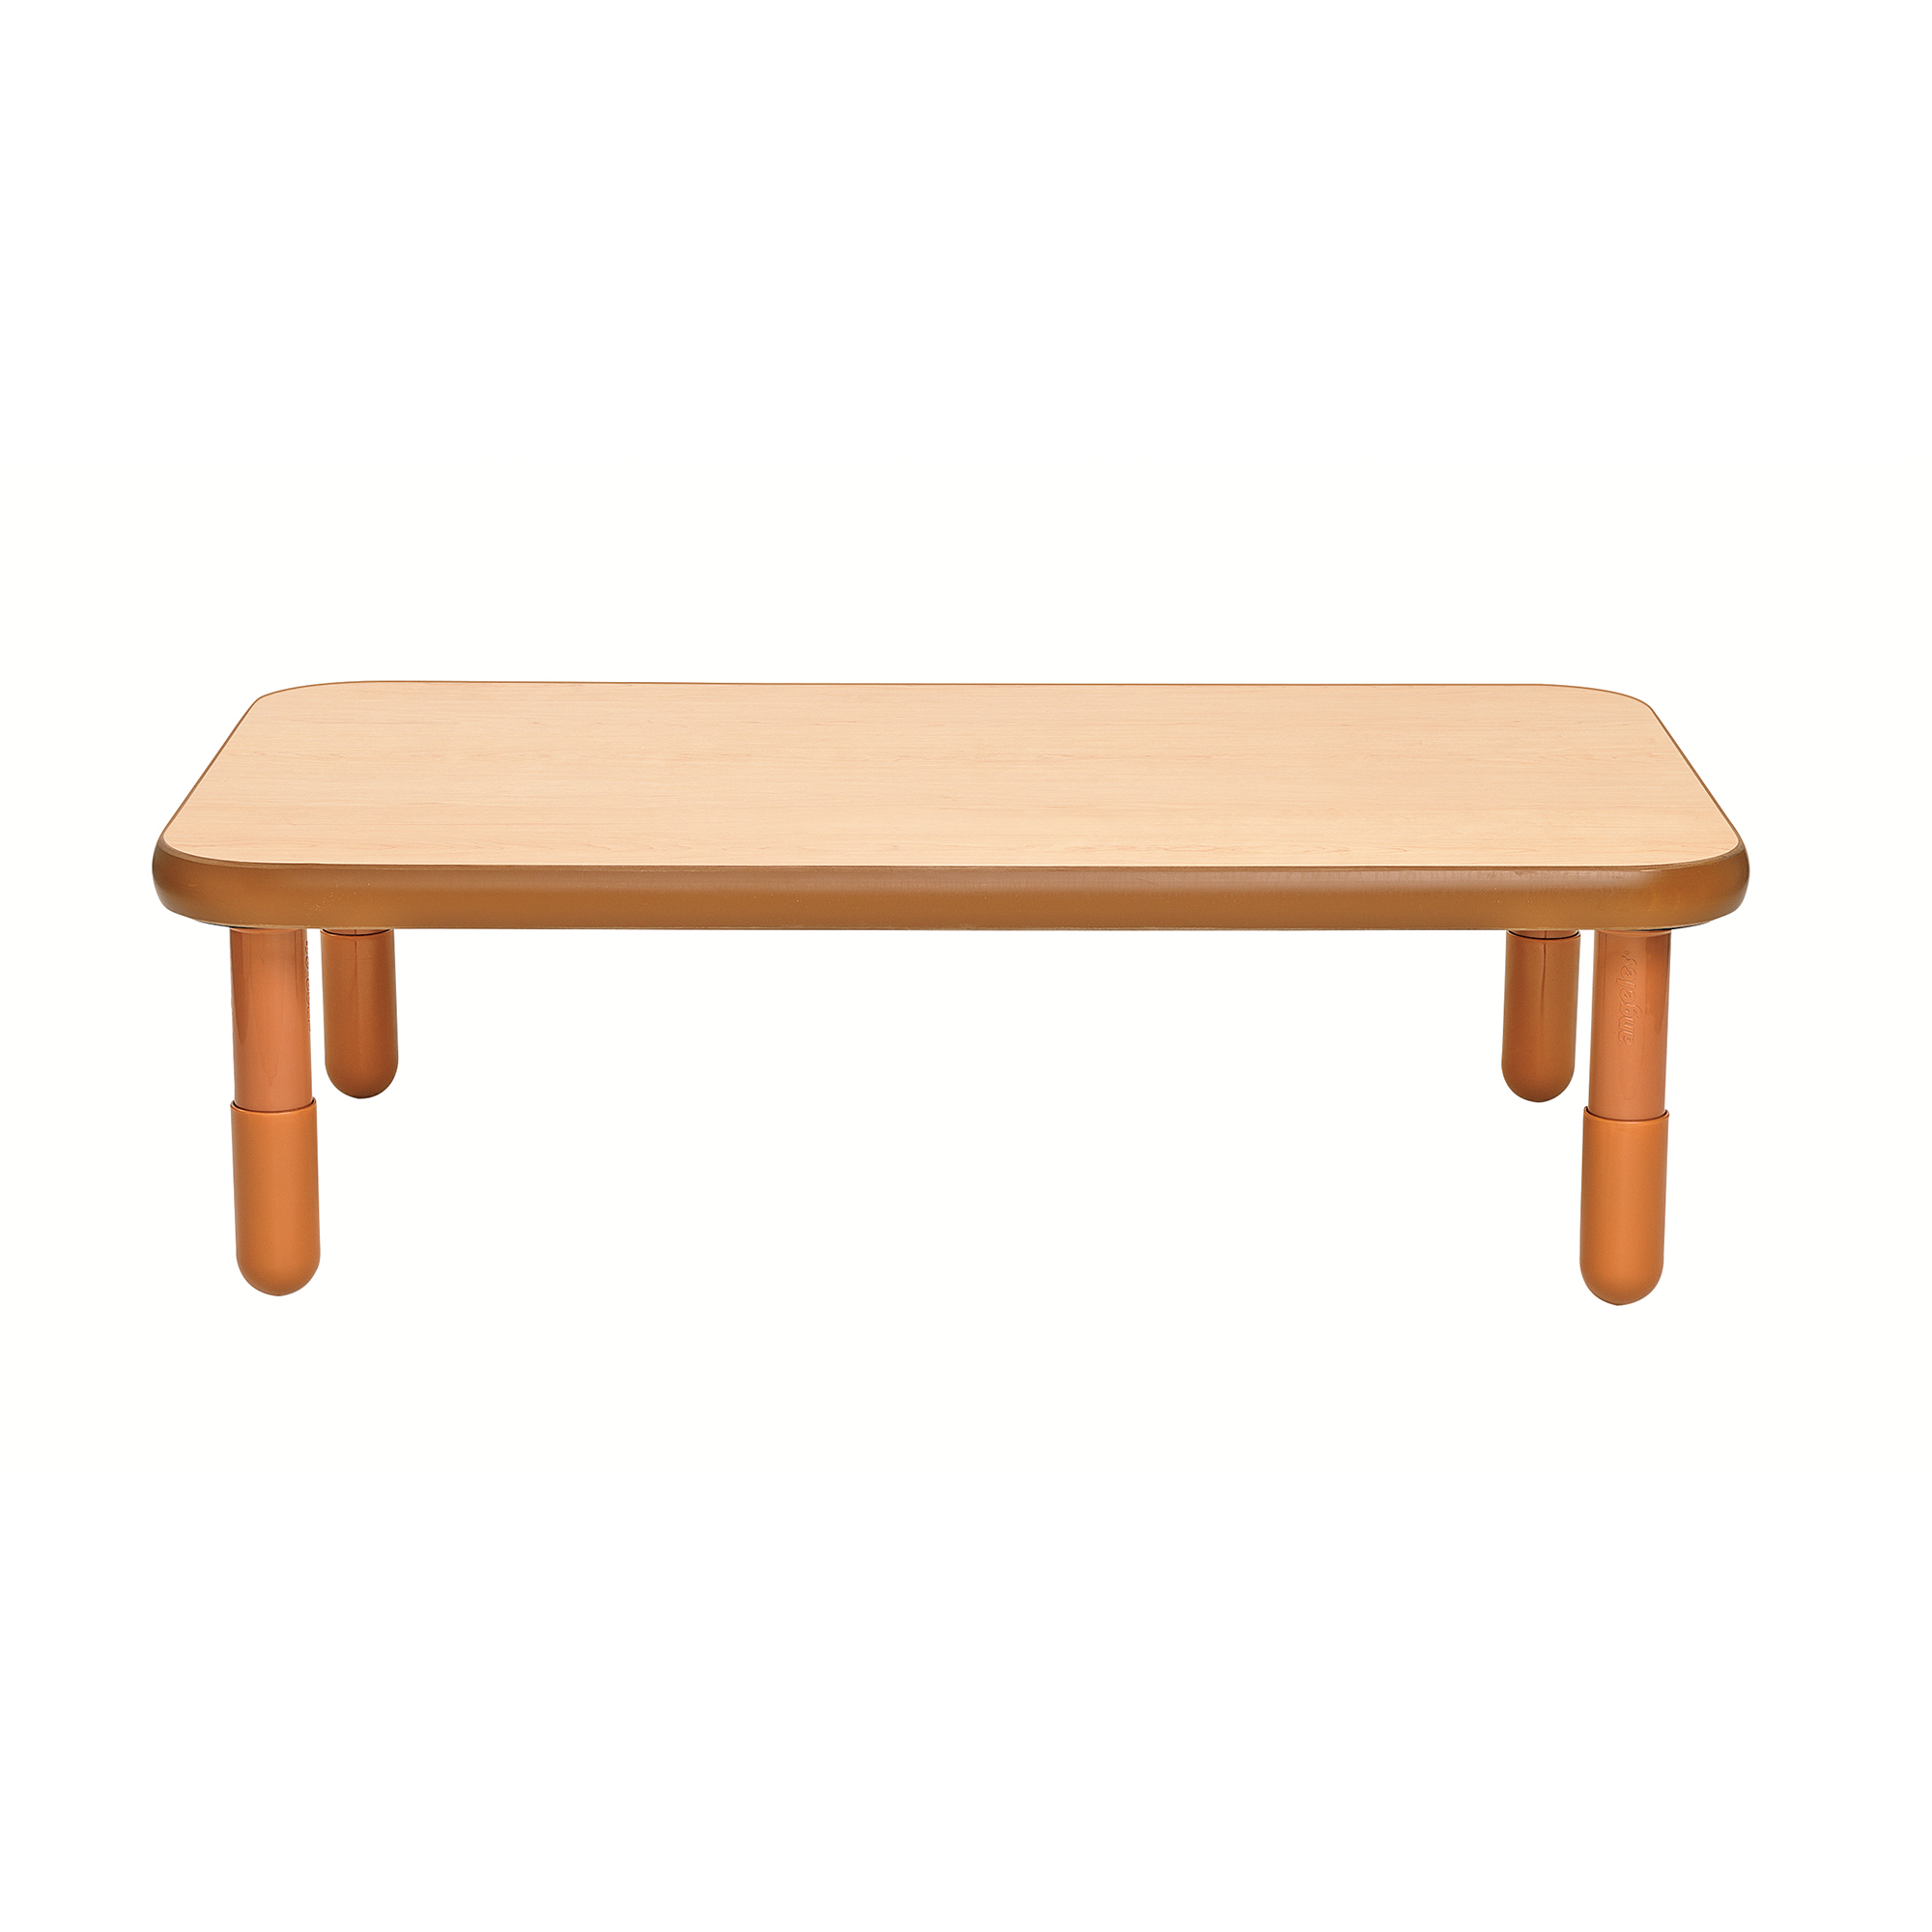 BaseLine® 122 cm  x 76 cm  Rectangular Table - Natural Wood with 35,5 cm  Legs